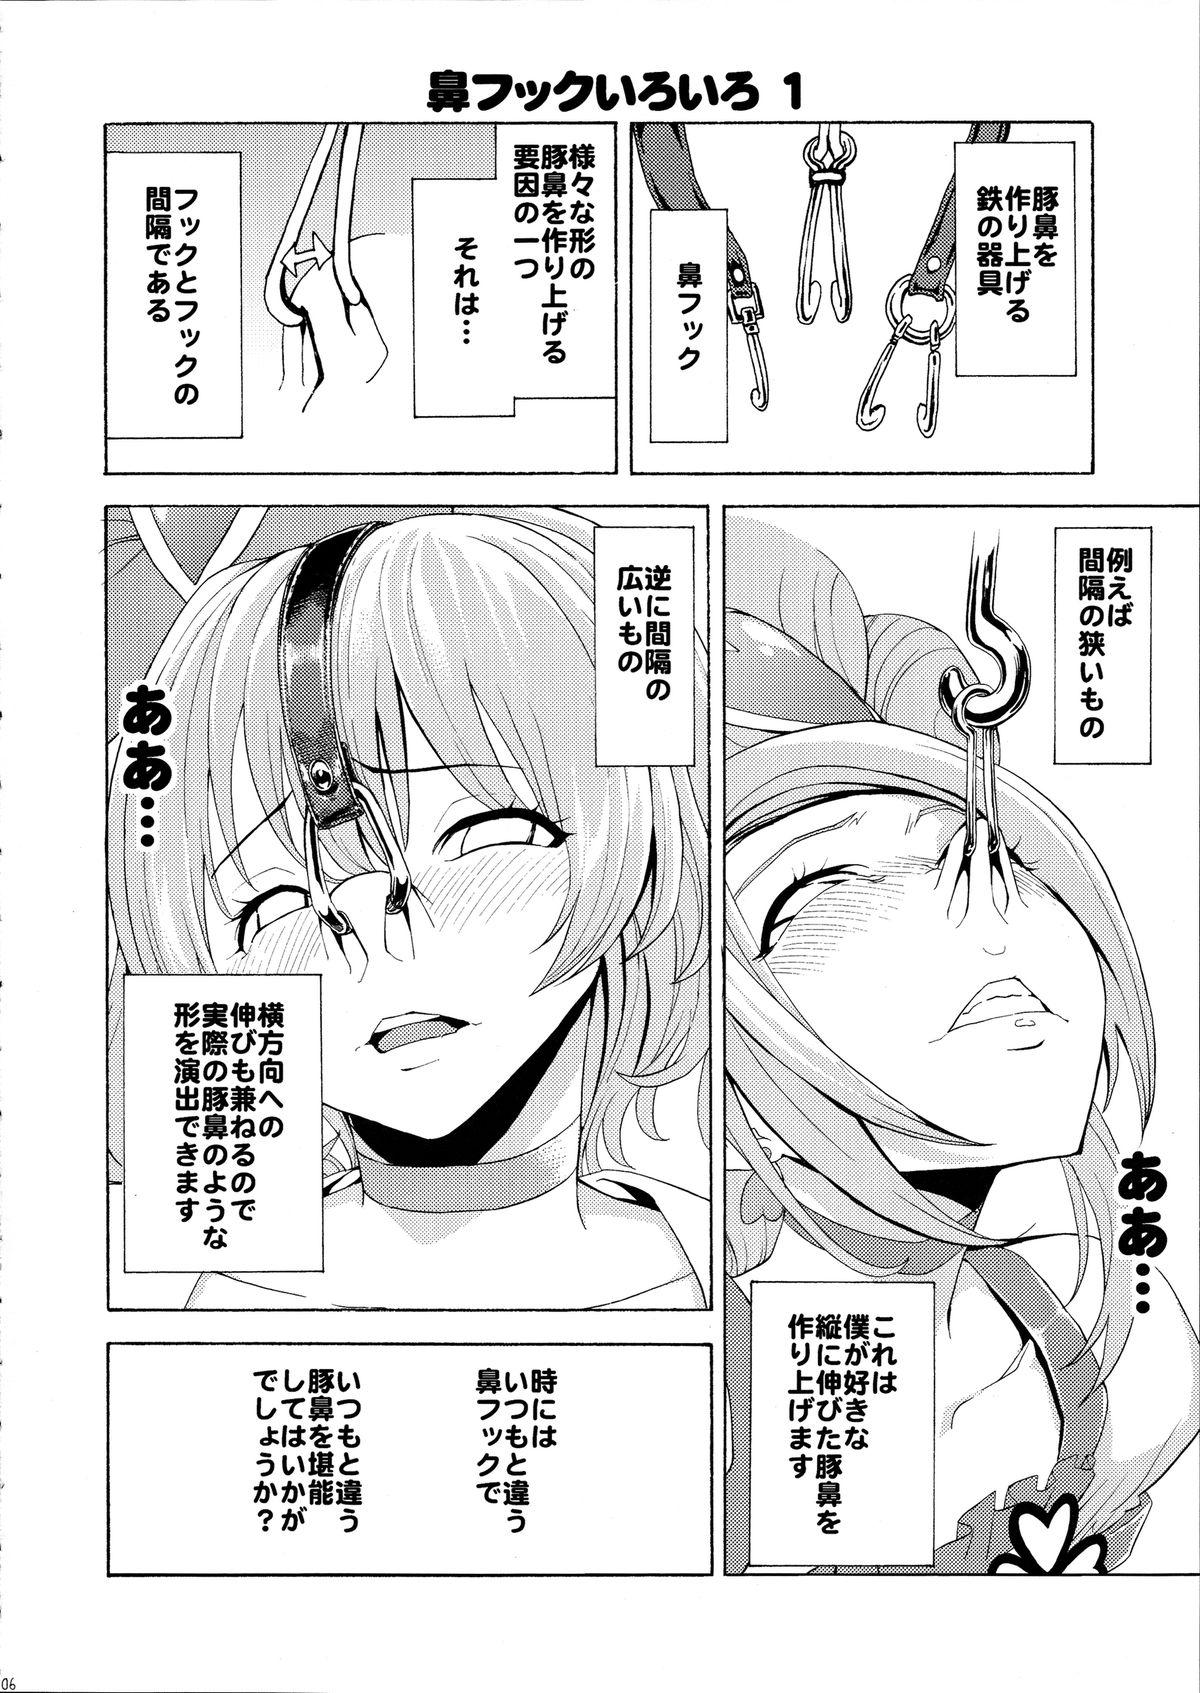 Massage Creep Hanazeme no hon sono 2 - Vocaloid Love plus Colegiala - Page 6